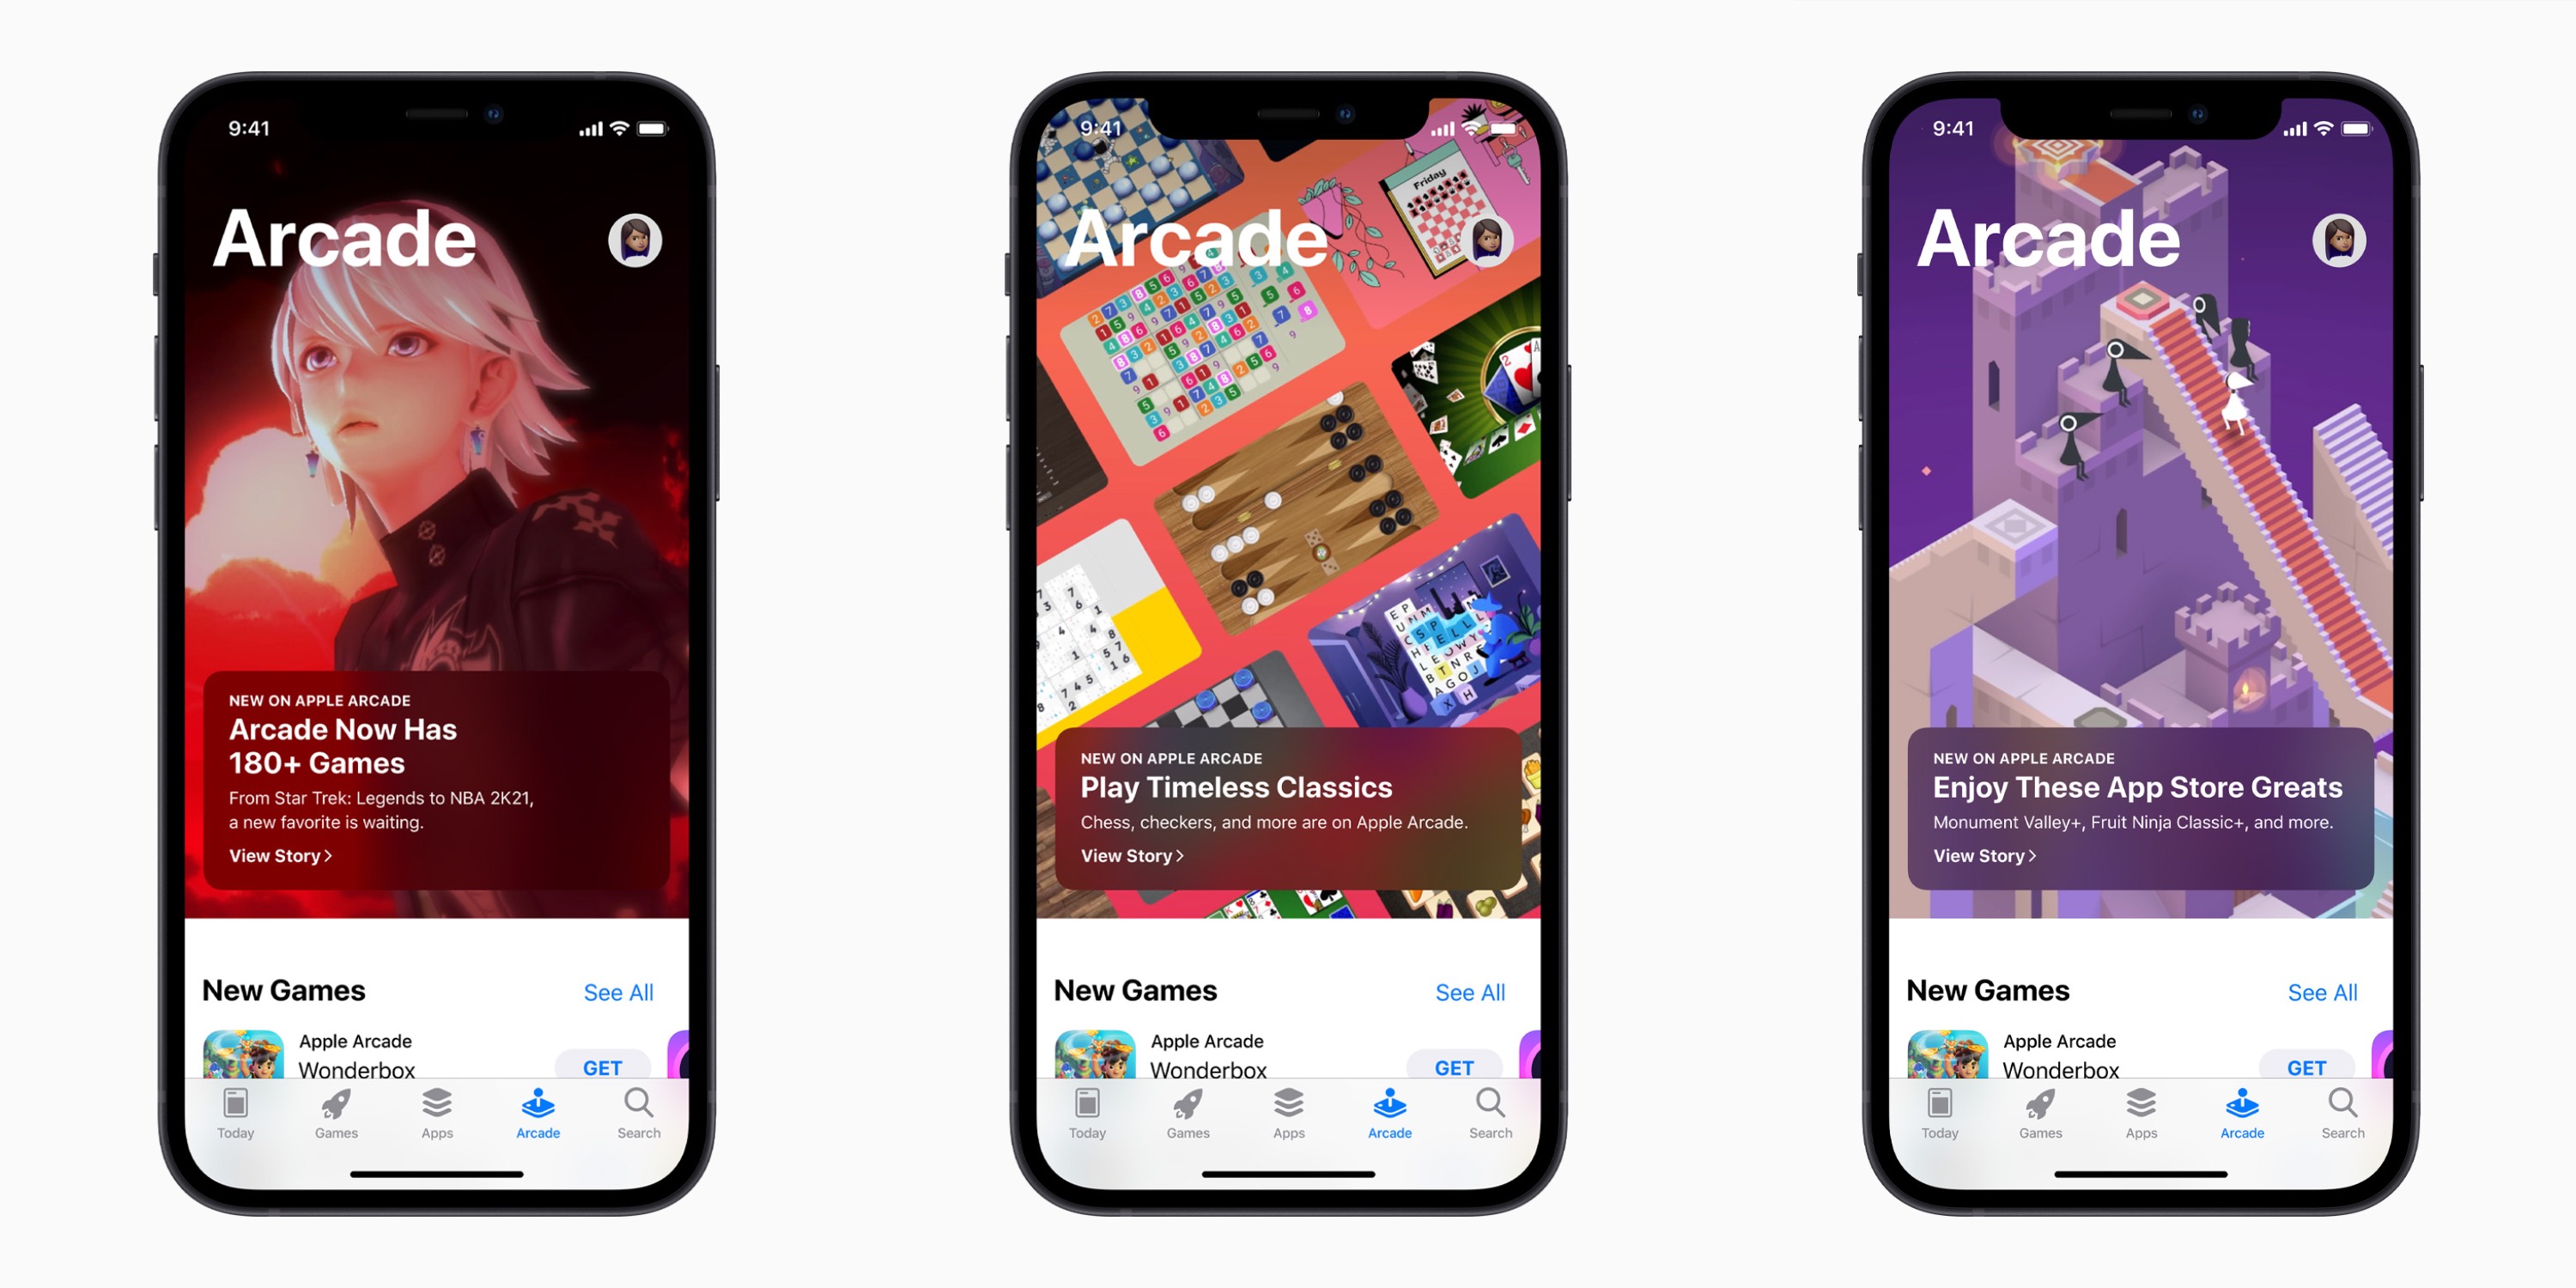 Apple Arcade games for iPhone, Mac, Apple TV [New: Pocket Card Jockey]